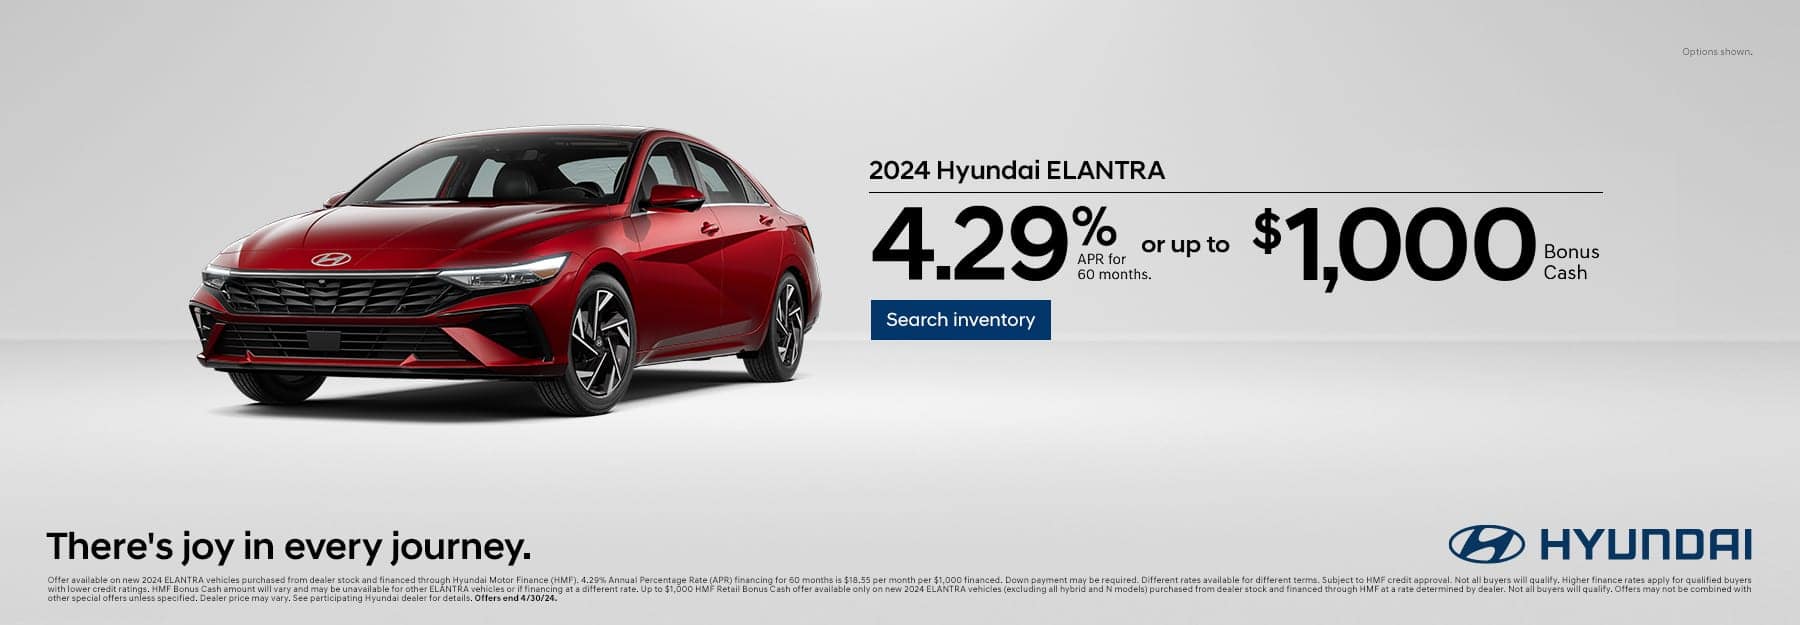 2024 Hyundai Elantra offer